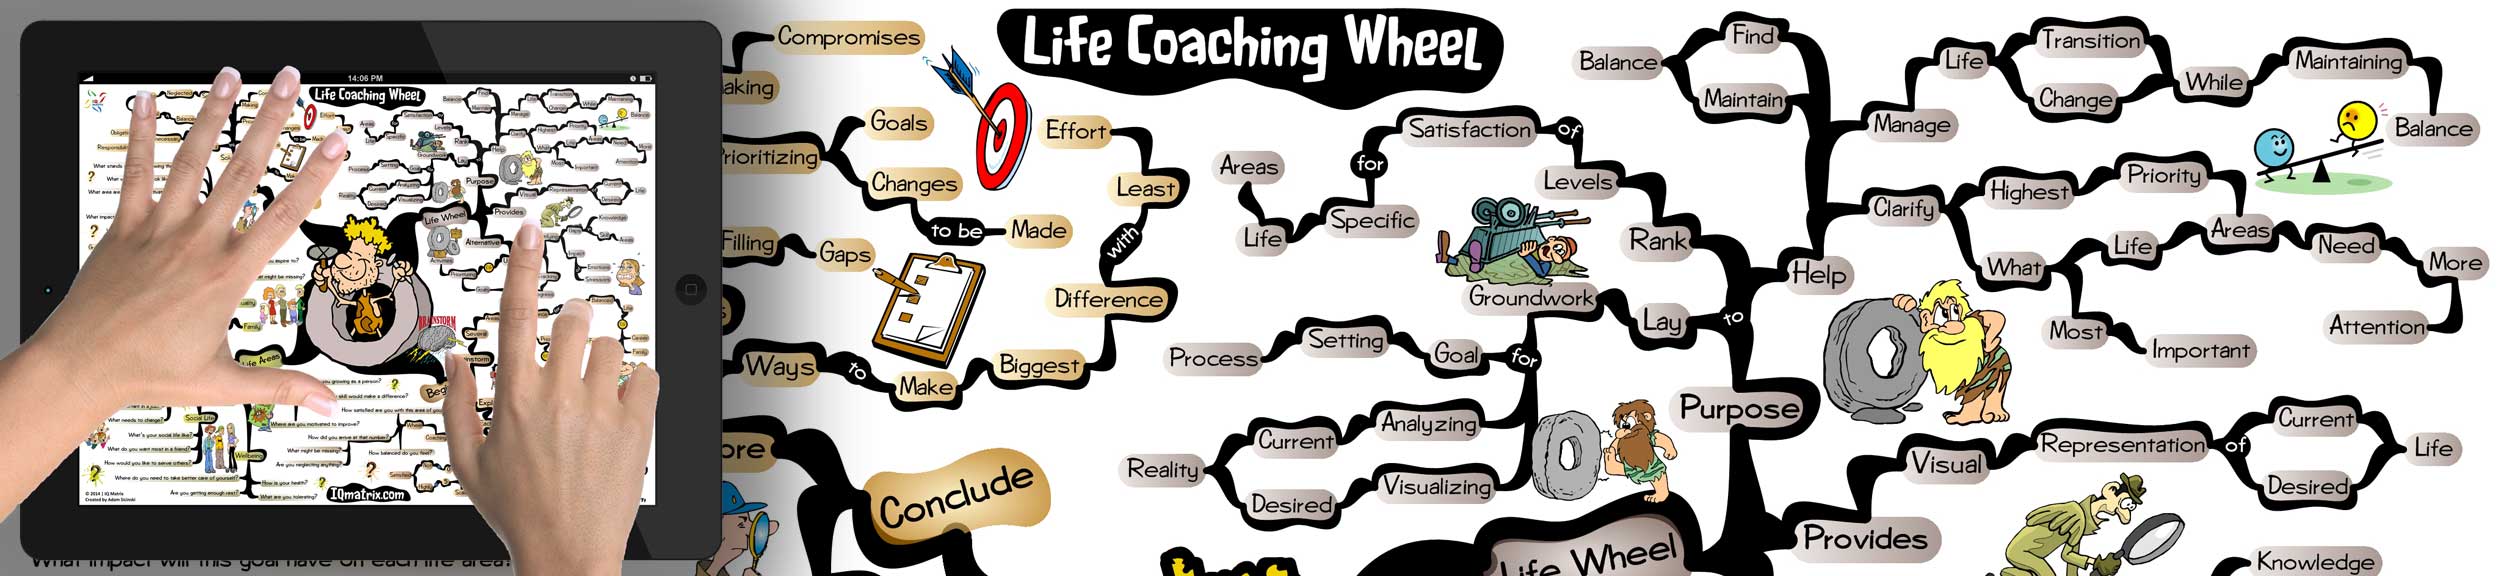 career coaching wheel of life